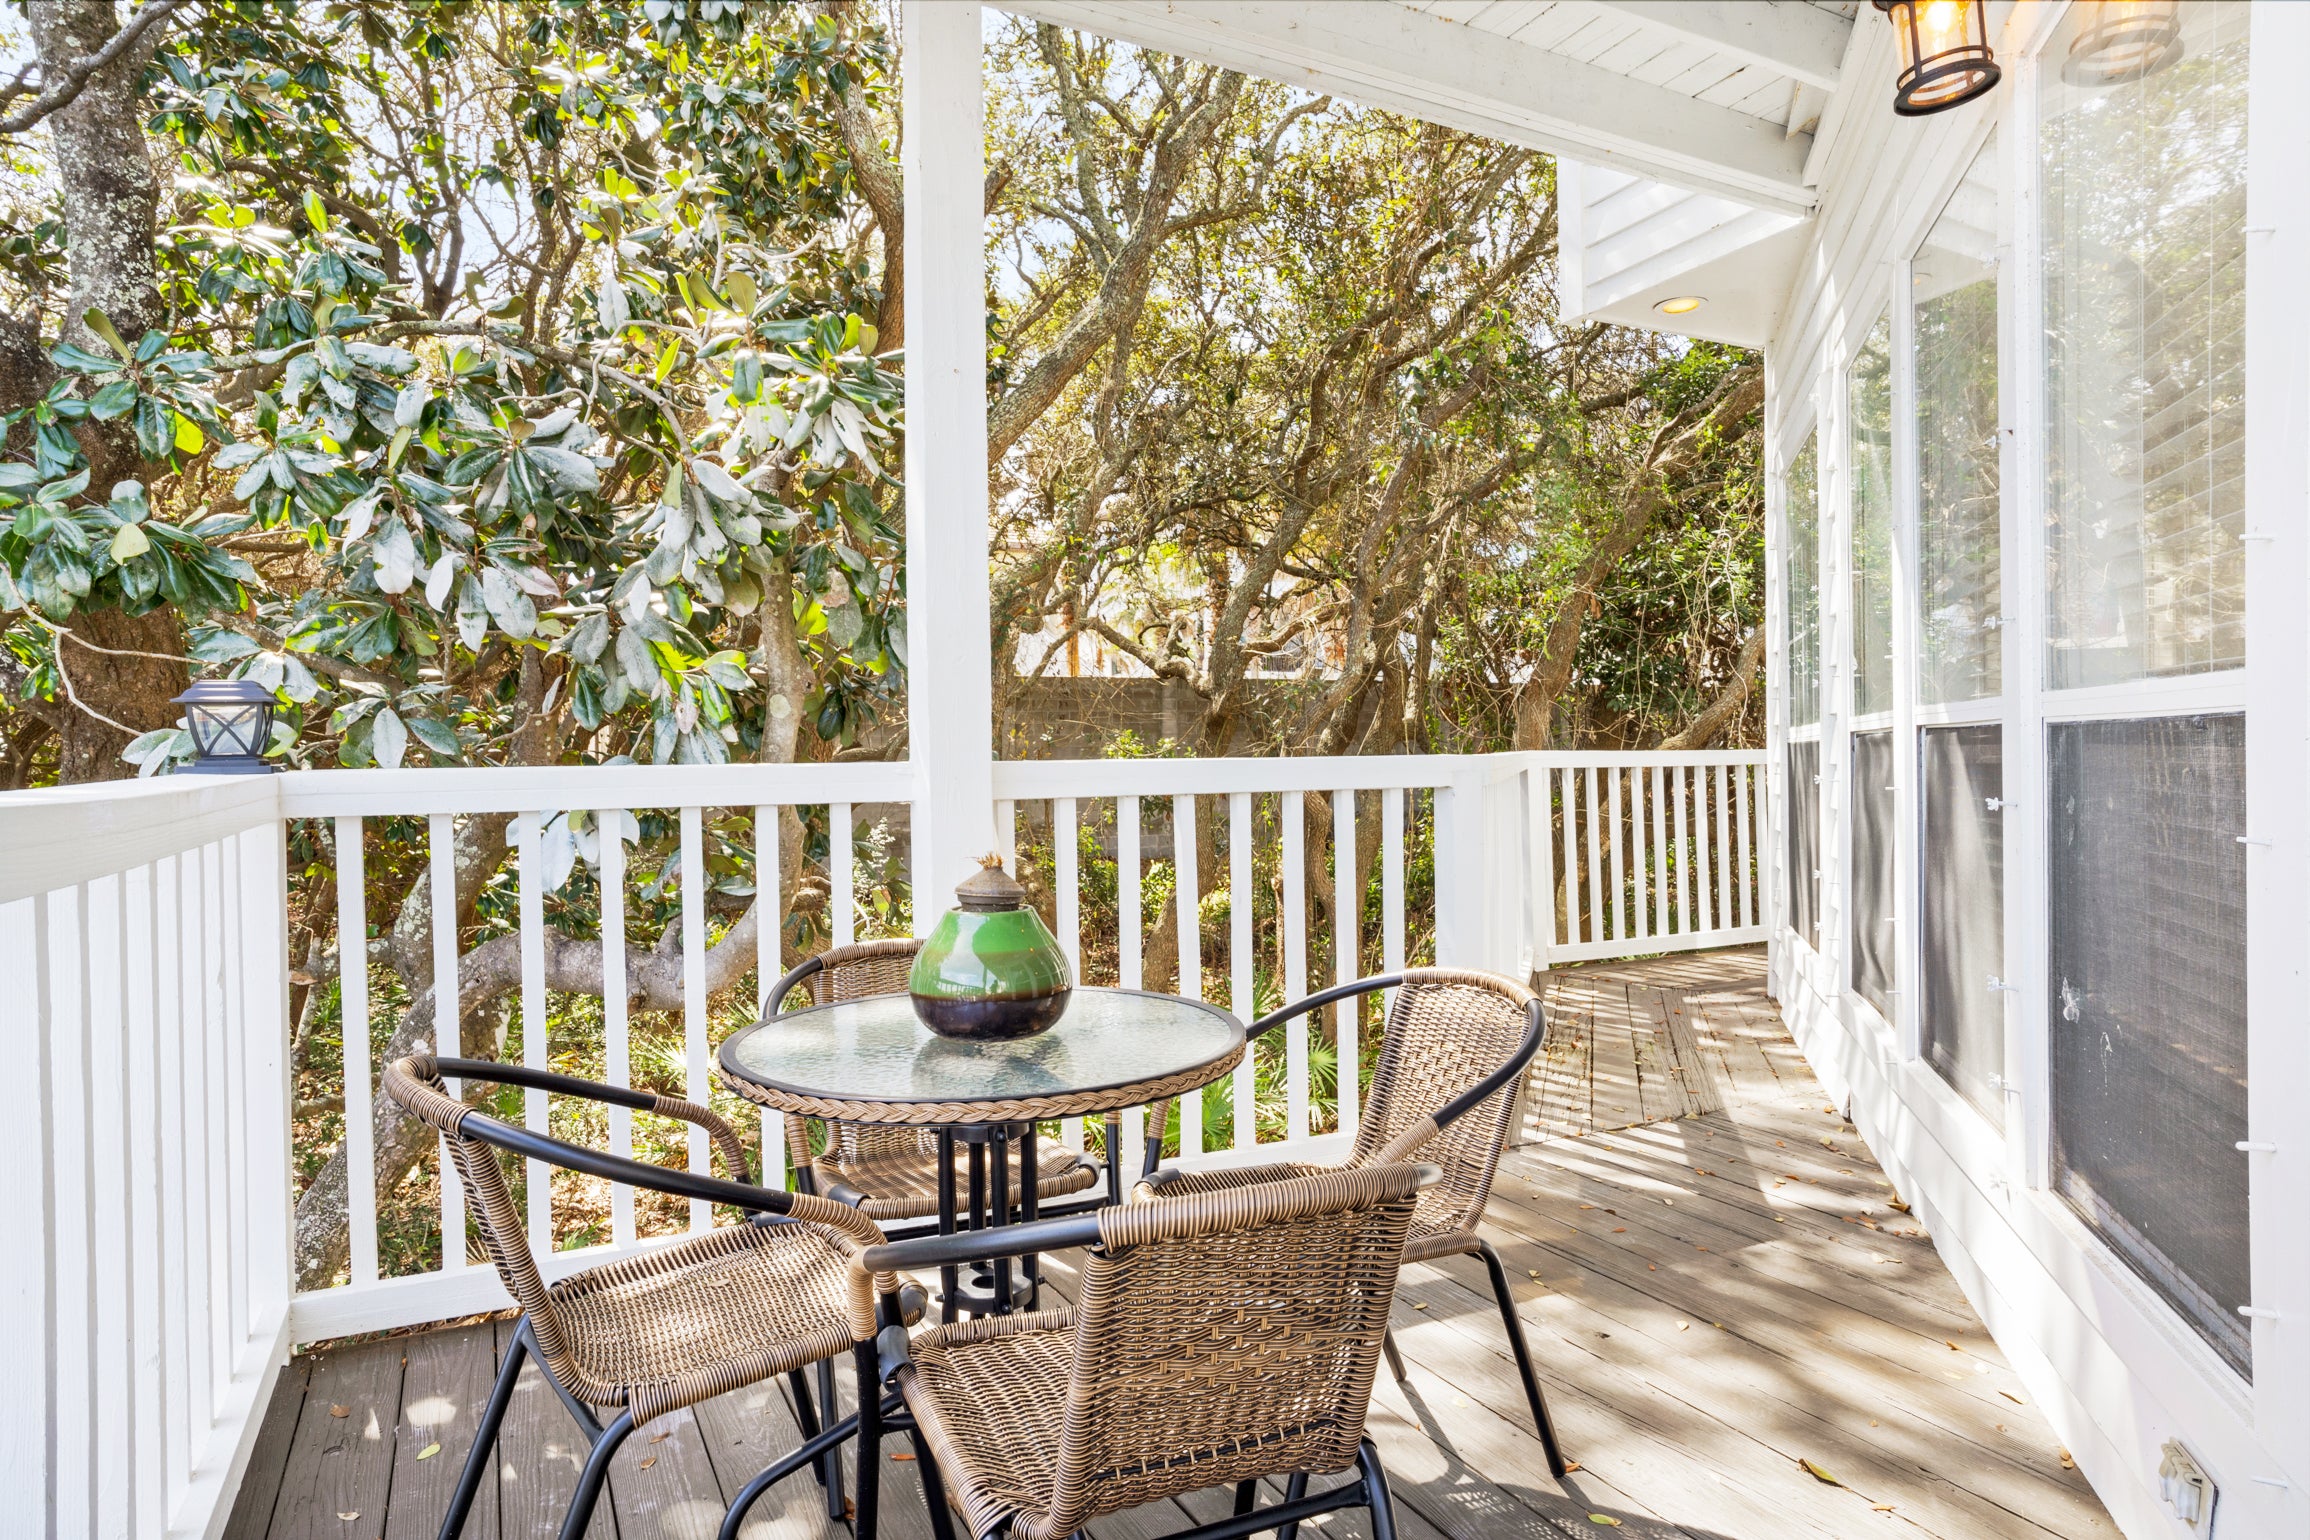 Enjoy the peaceful back porch